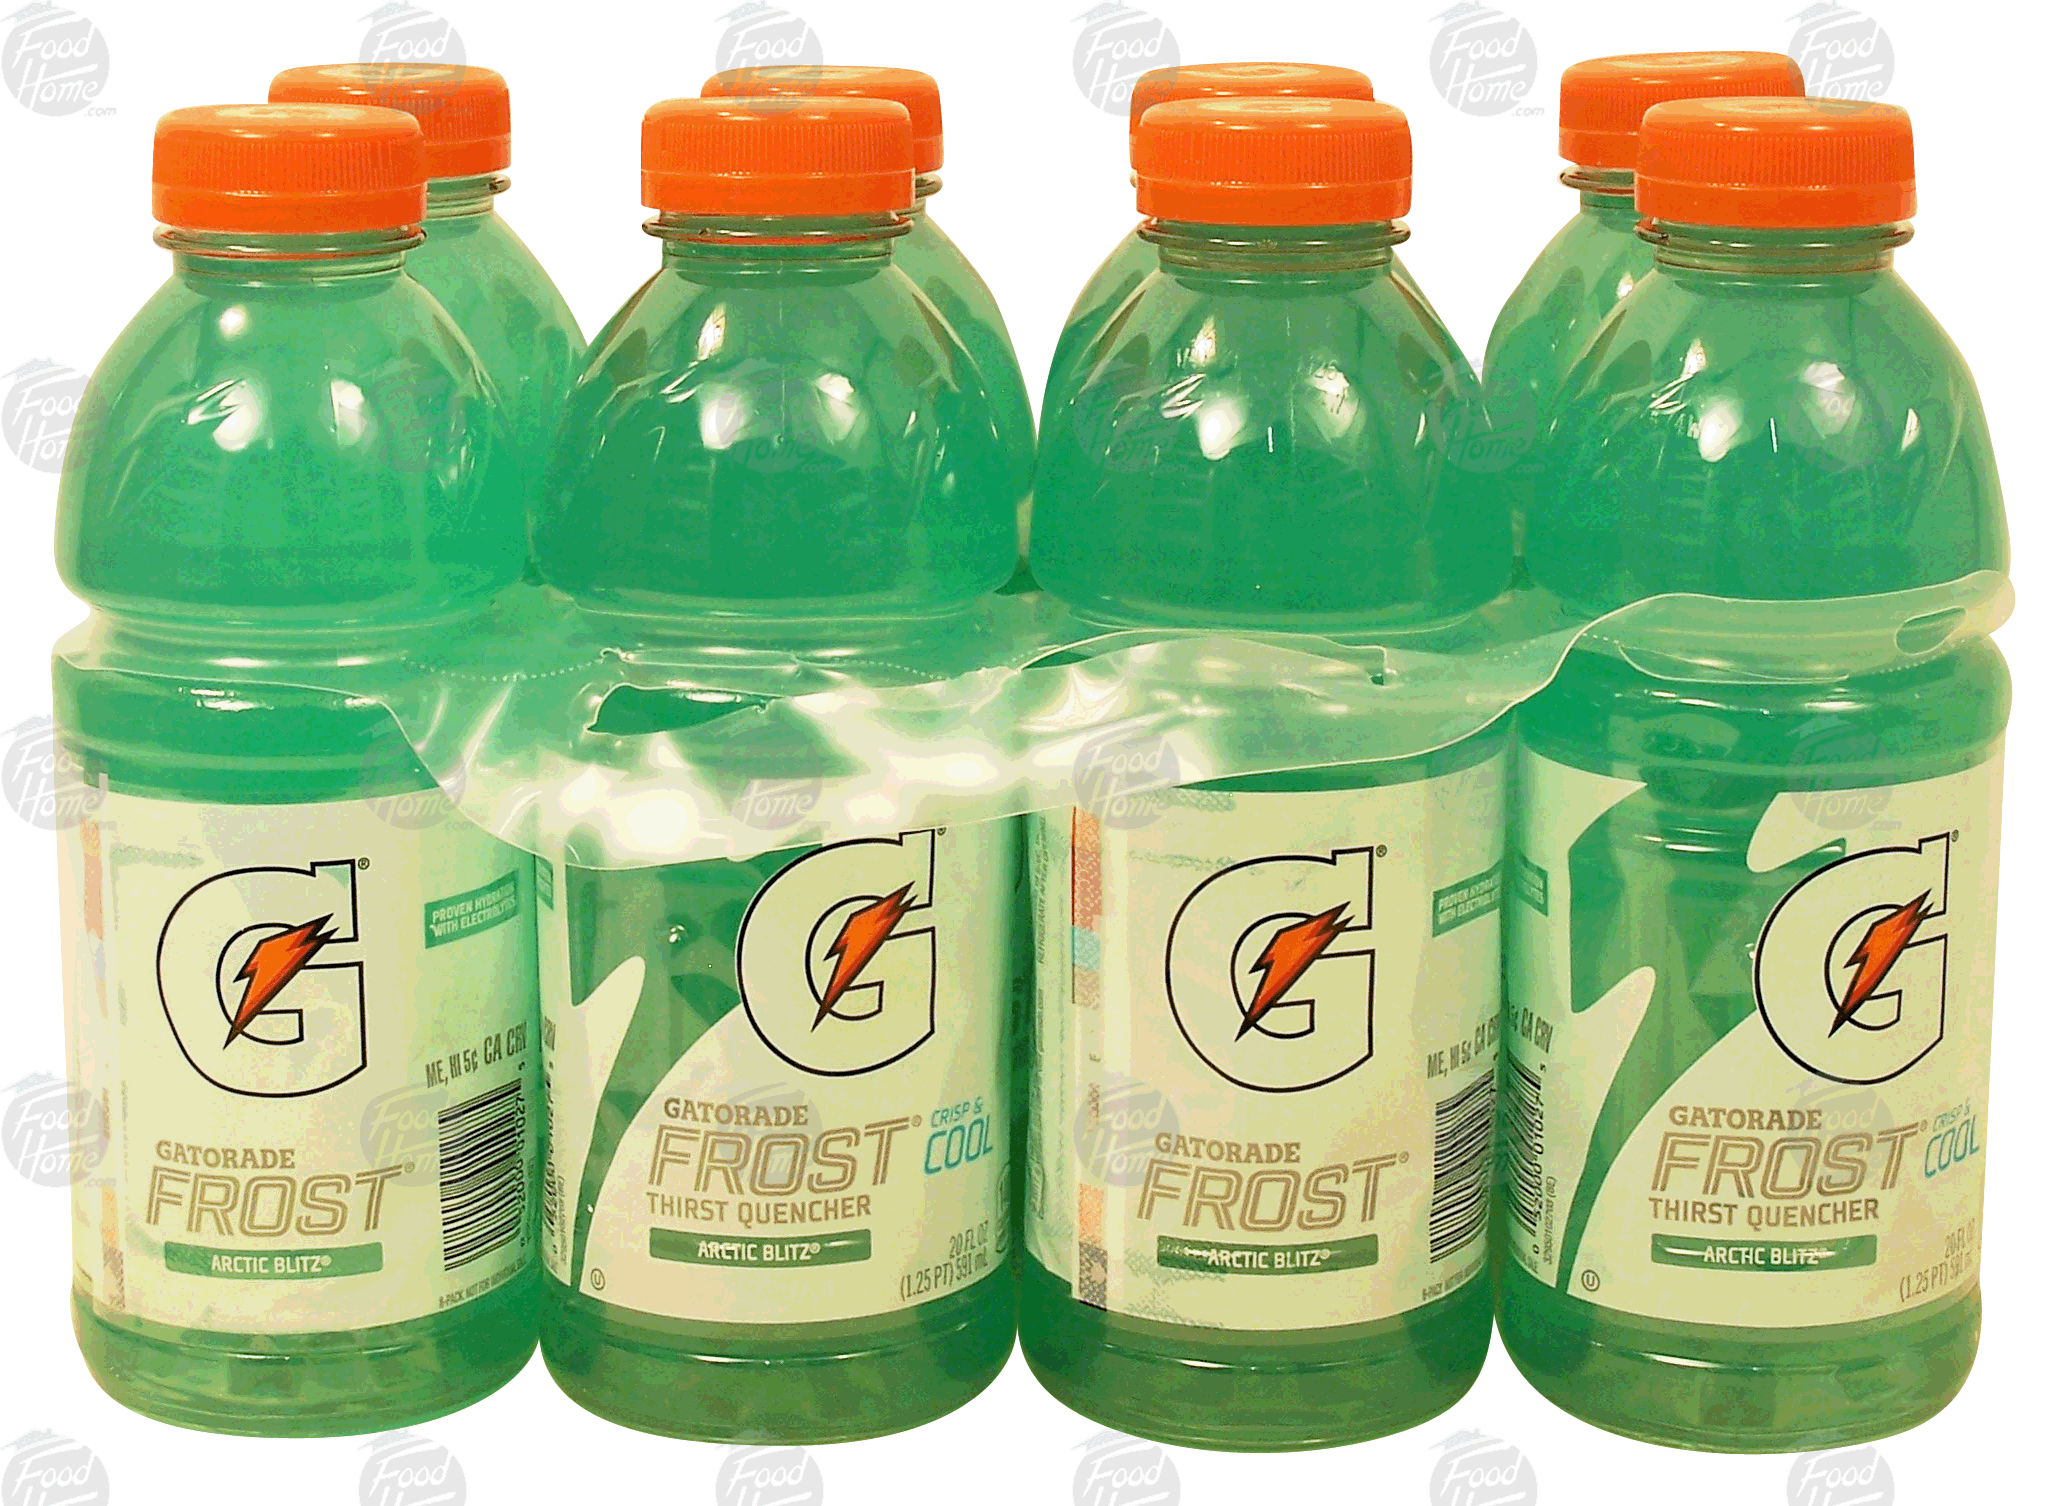 Gatorade Frost arctic blitz thirst quencher beverage, 20-fl. oz. Full-Size Picture